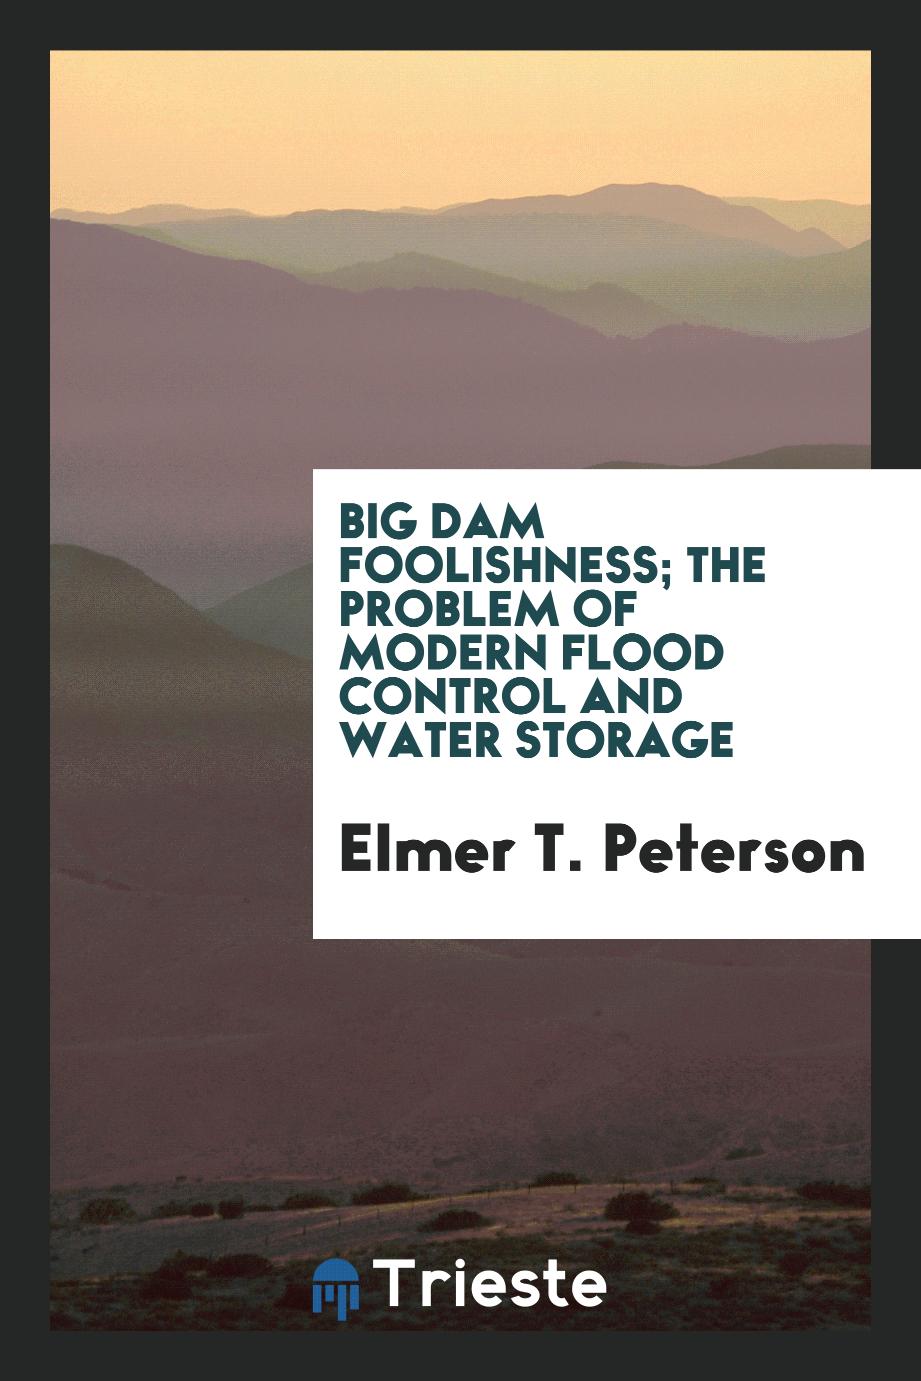 Big dam foolishness; the problem of modern flood control and water storage